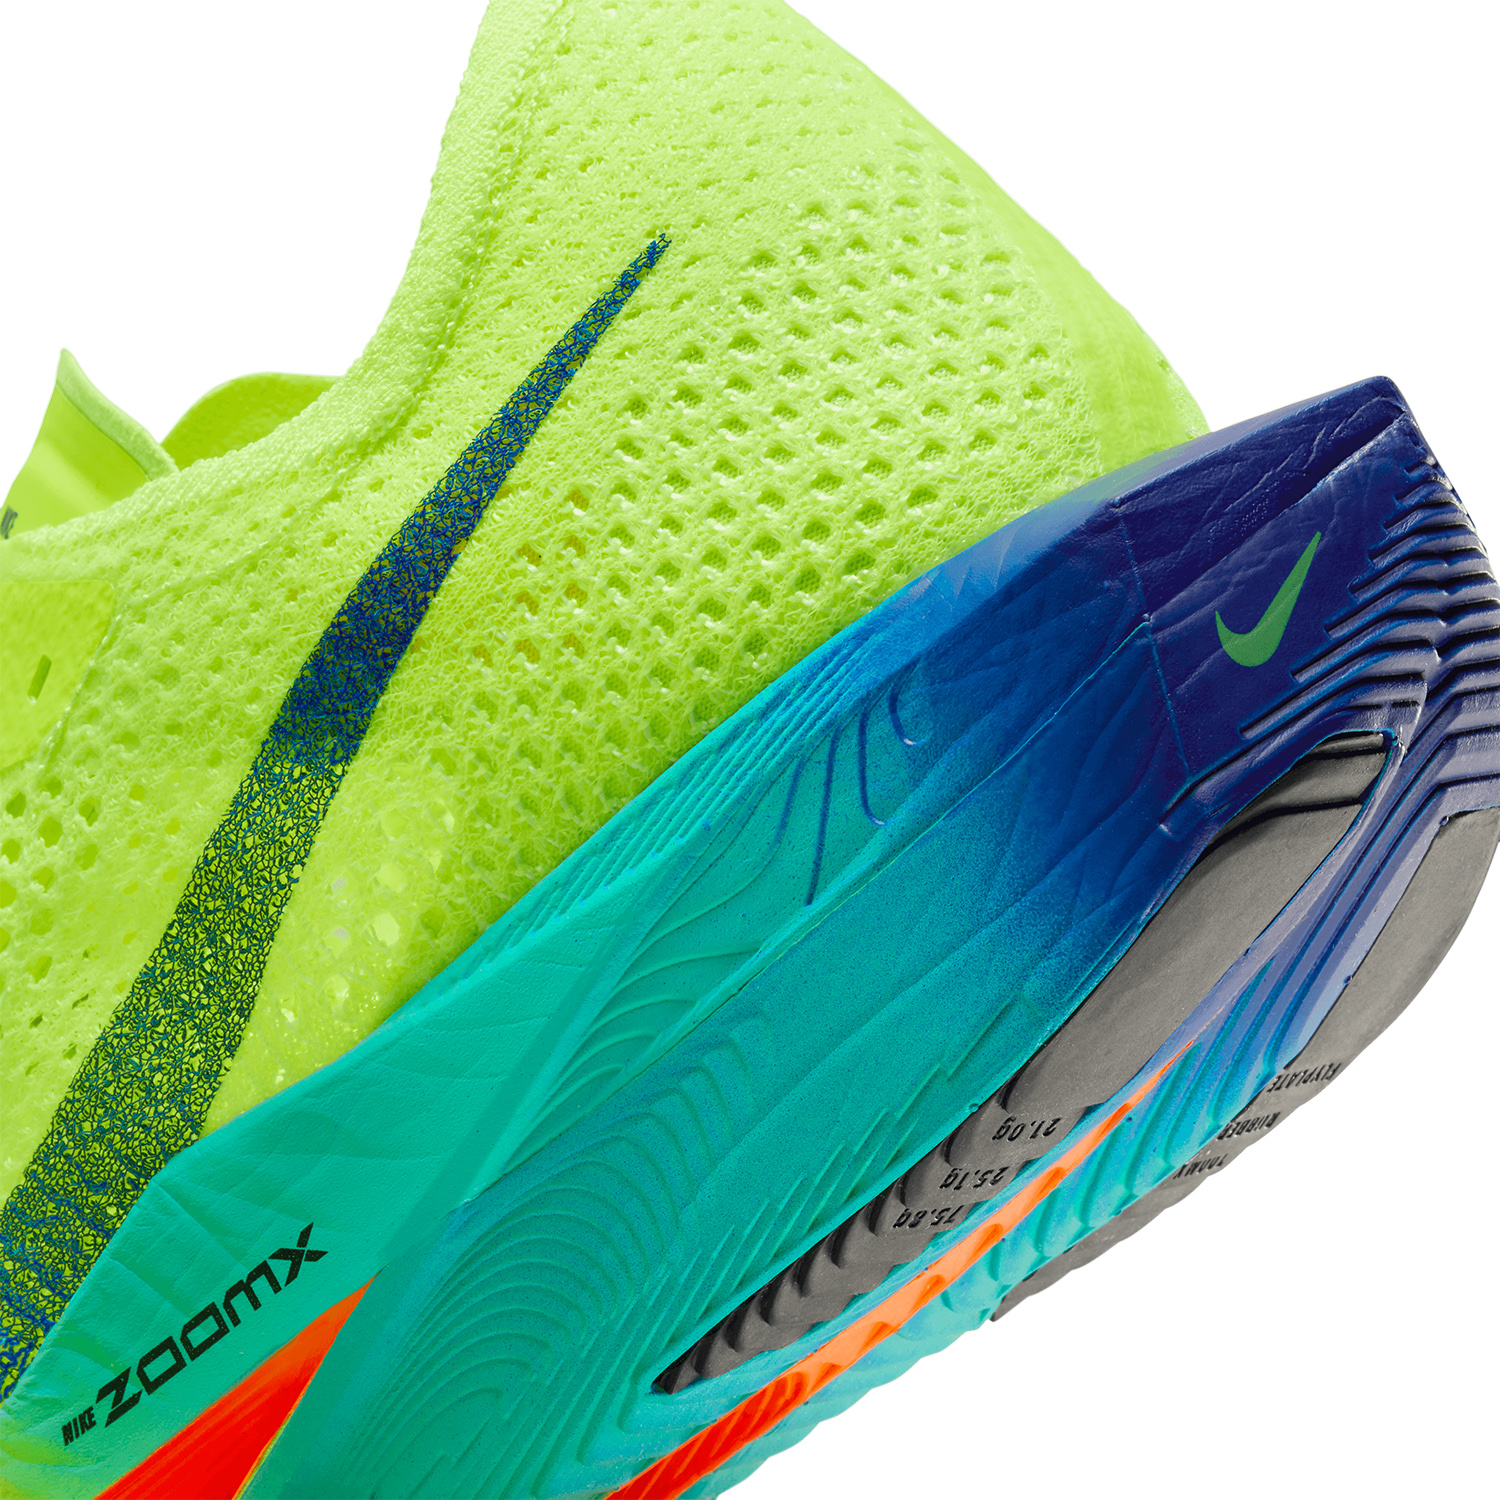 Nike ZoomX Vaporfly Next% 3 Men's Running Shoes - Volt/Black